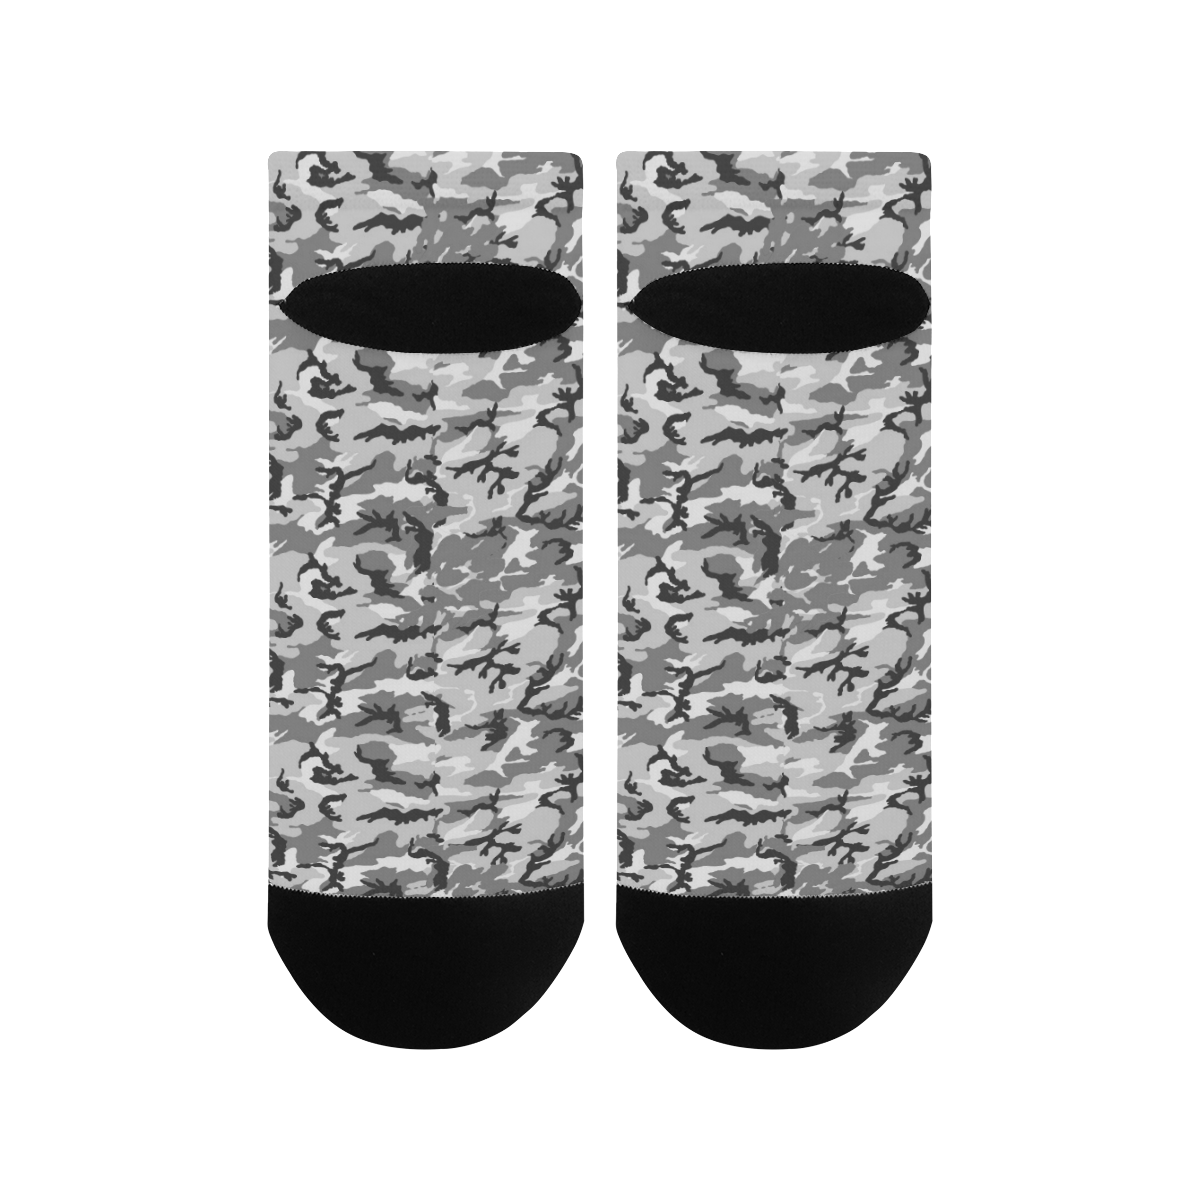 Woodland Urban City Black/Gray Camouflage Women's Ankle Socks